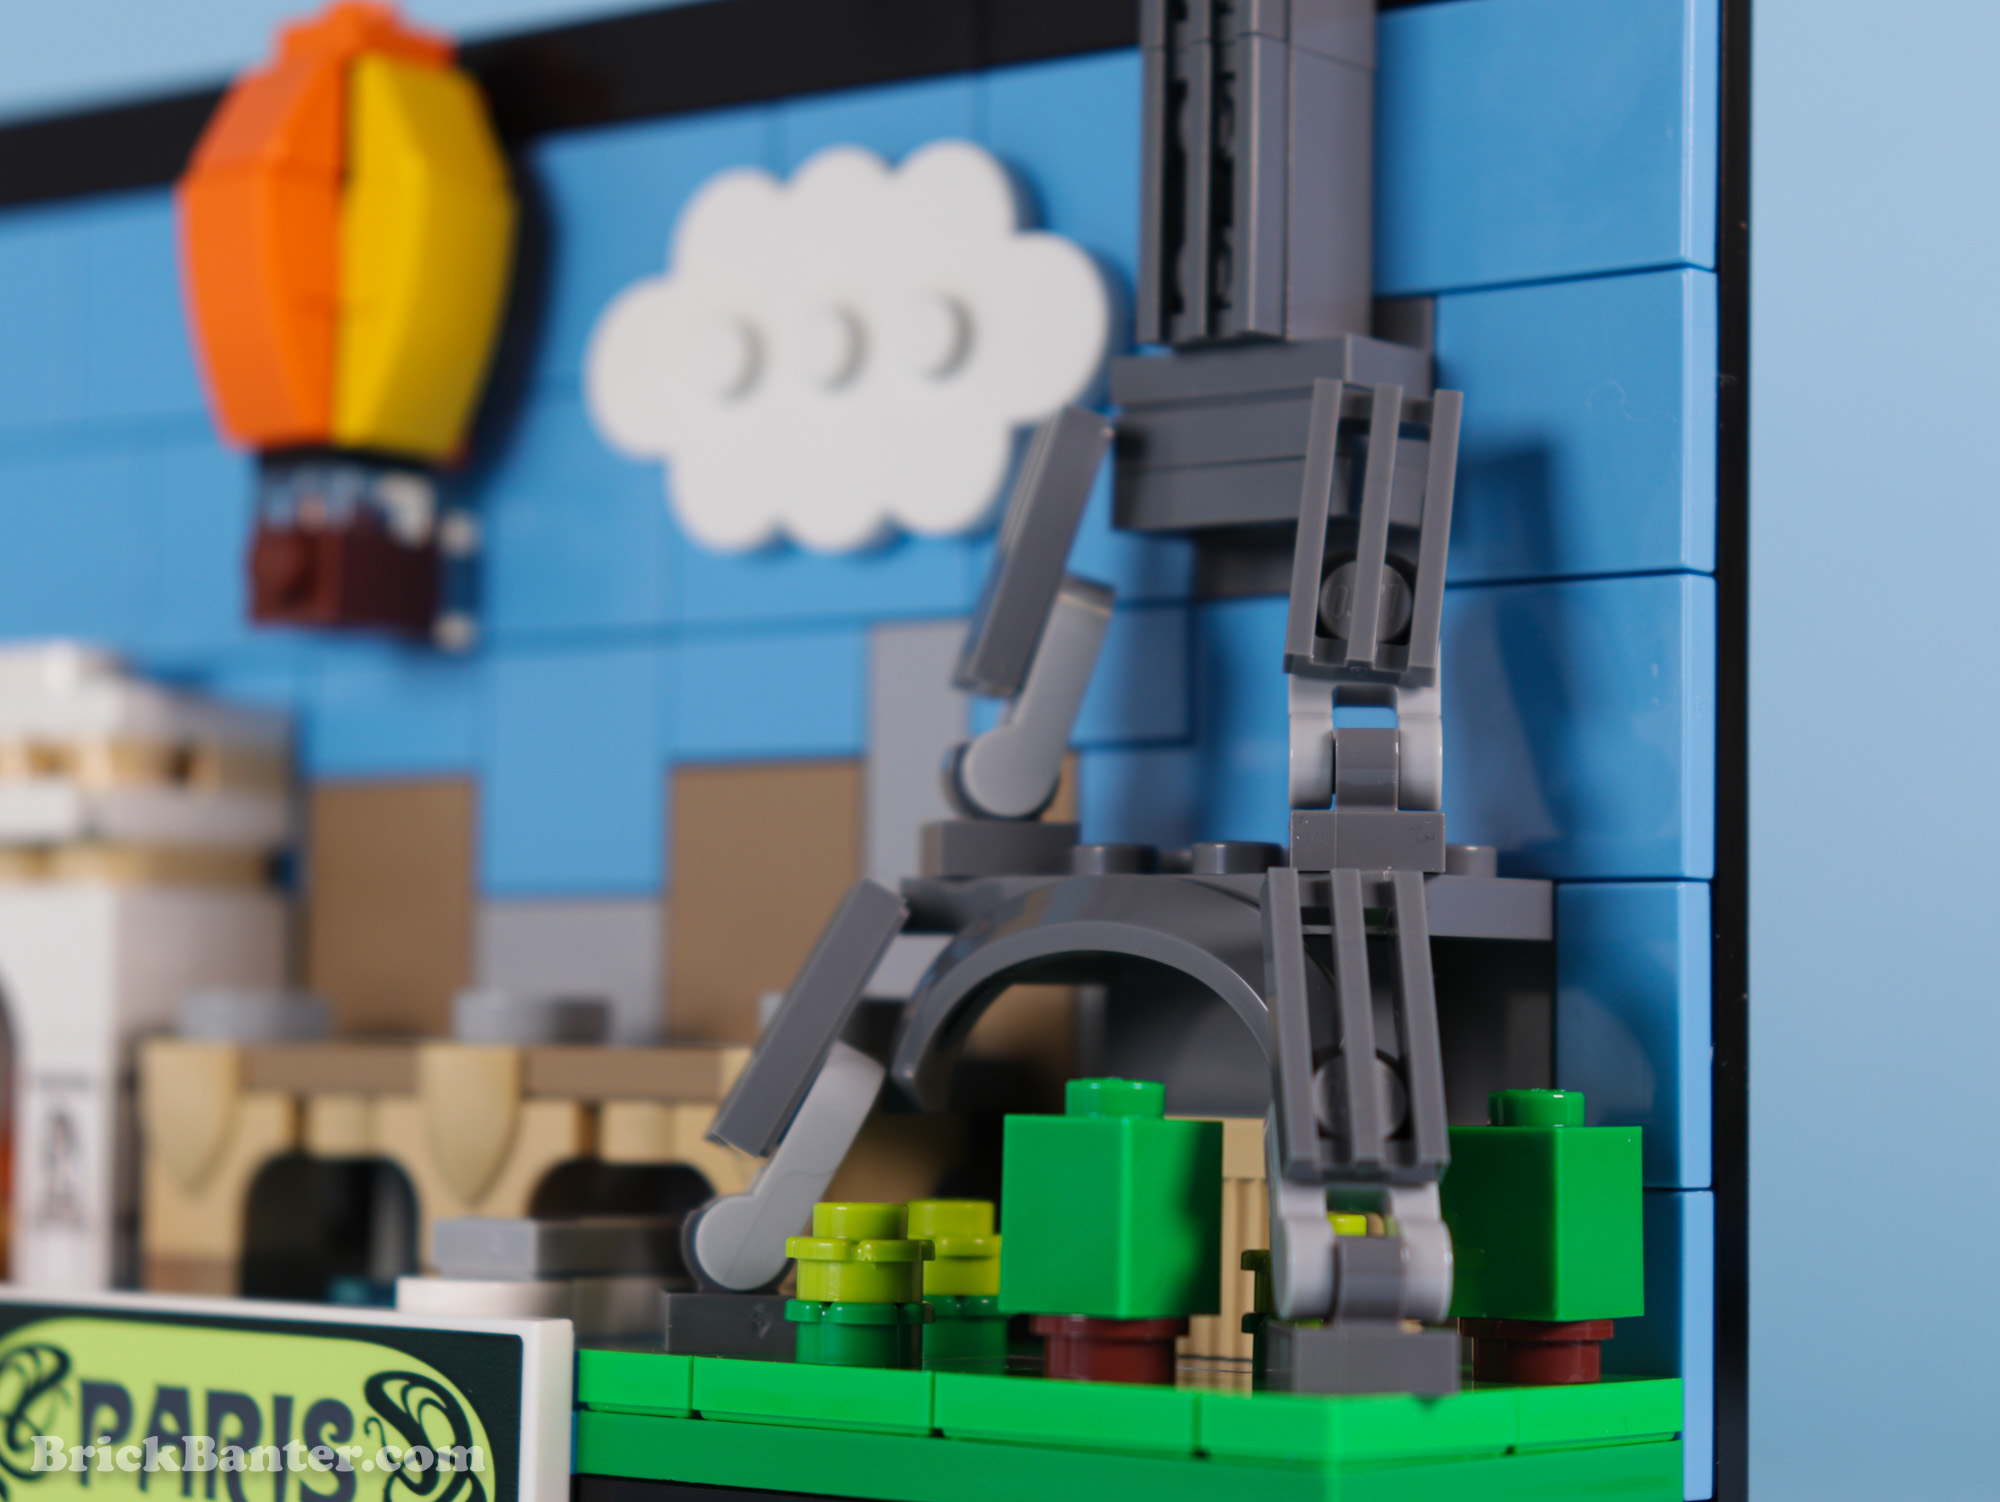 LEGO 40569 - Paris Postcard   - Creator Theme - New Release Brick Banter Review